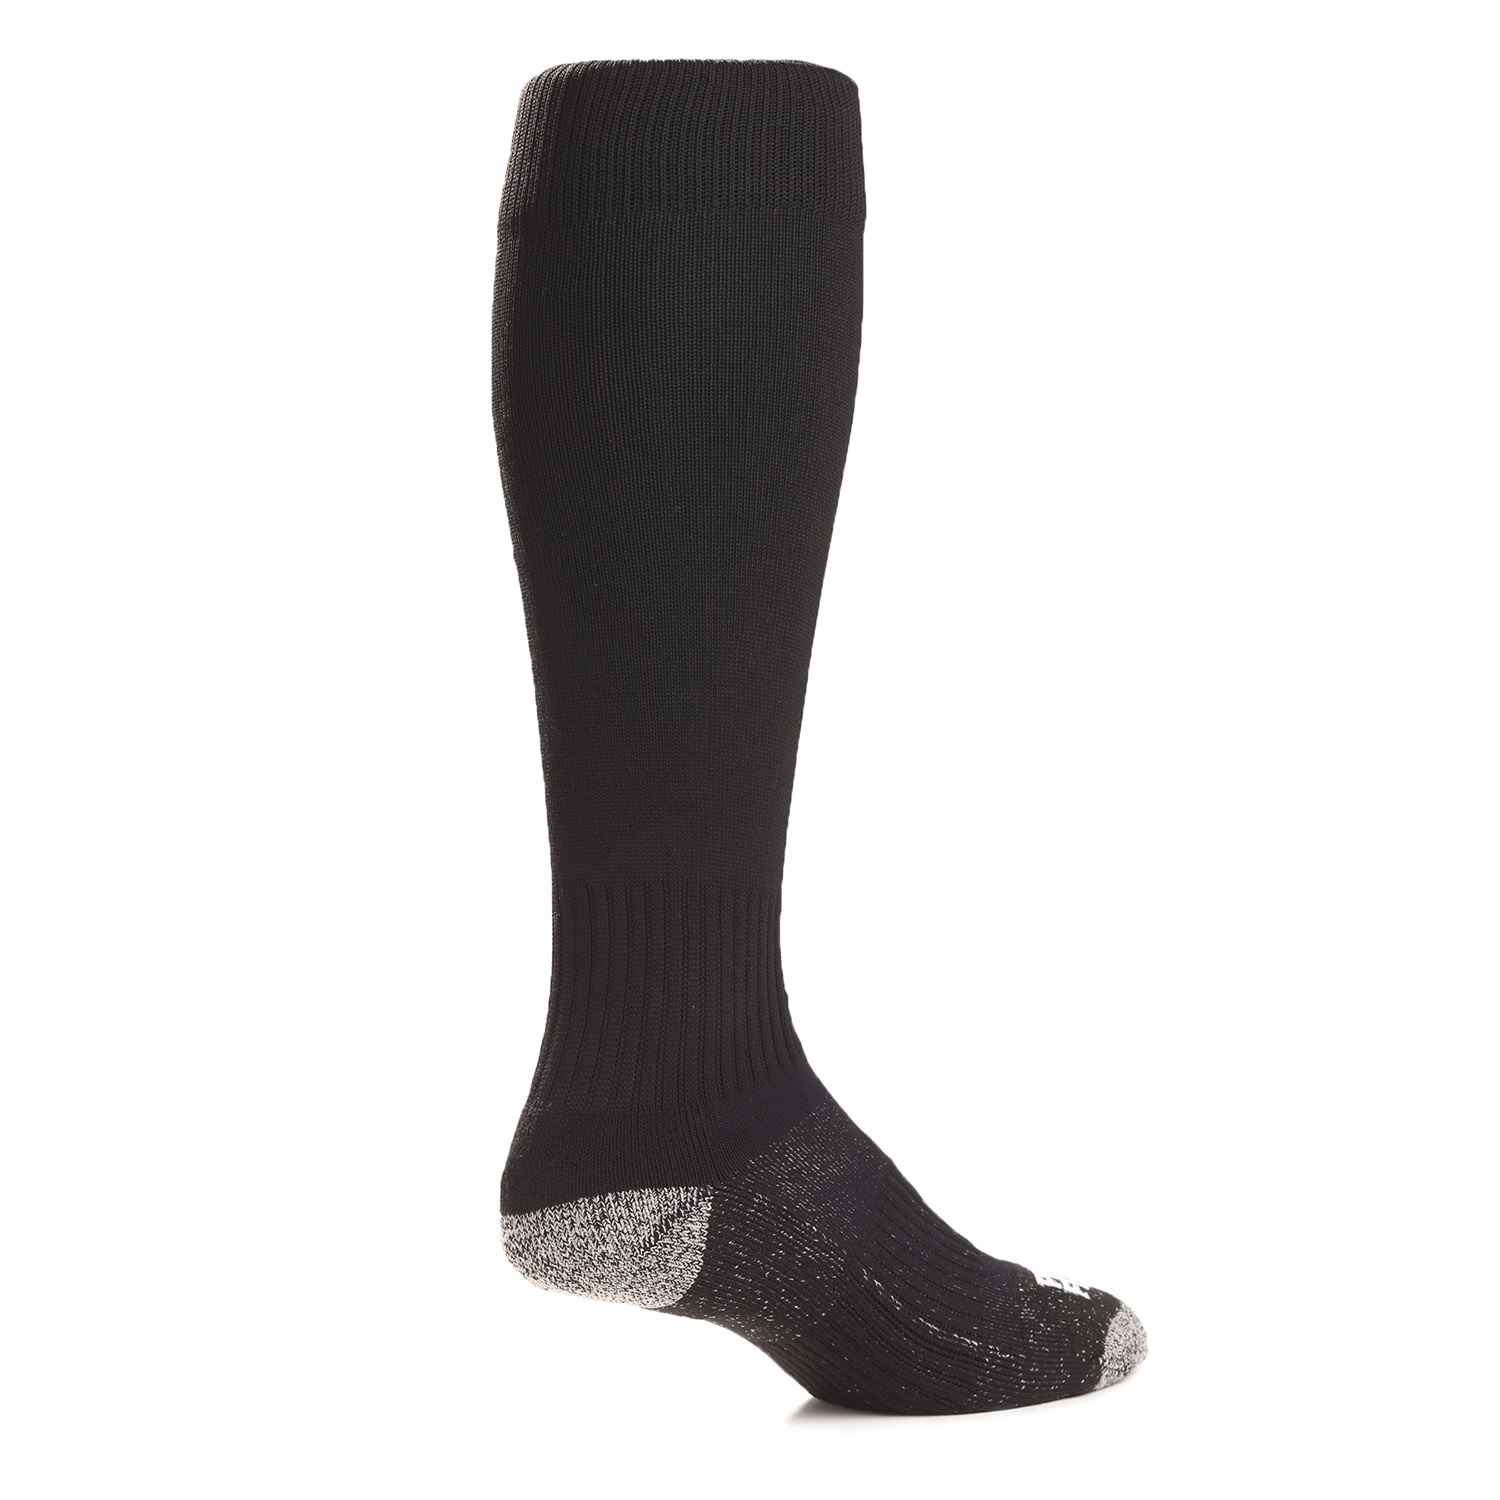 Pro Feet Performance Silver Tech Over-The-Calf Socks